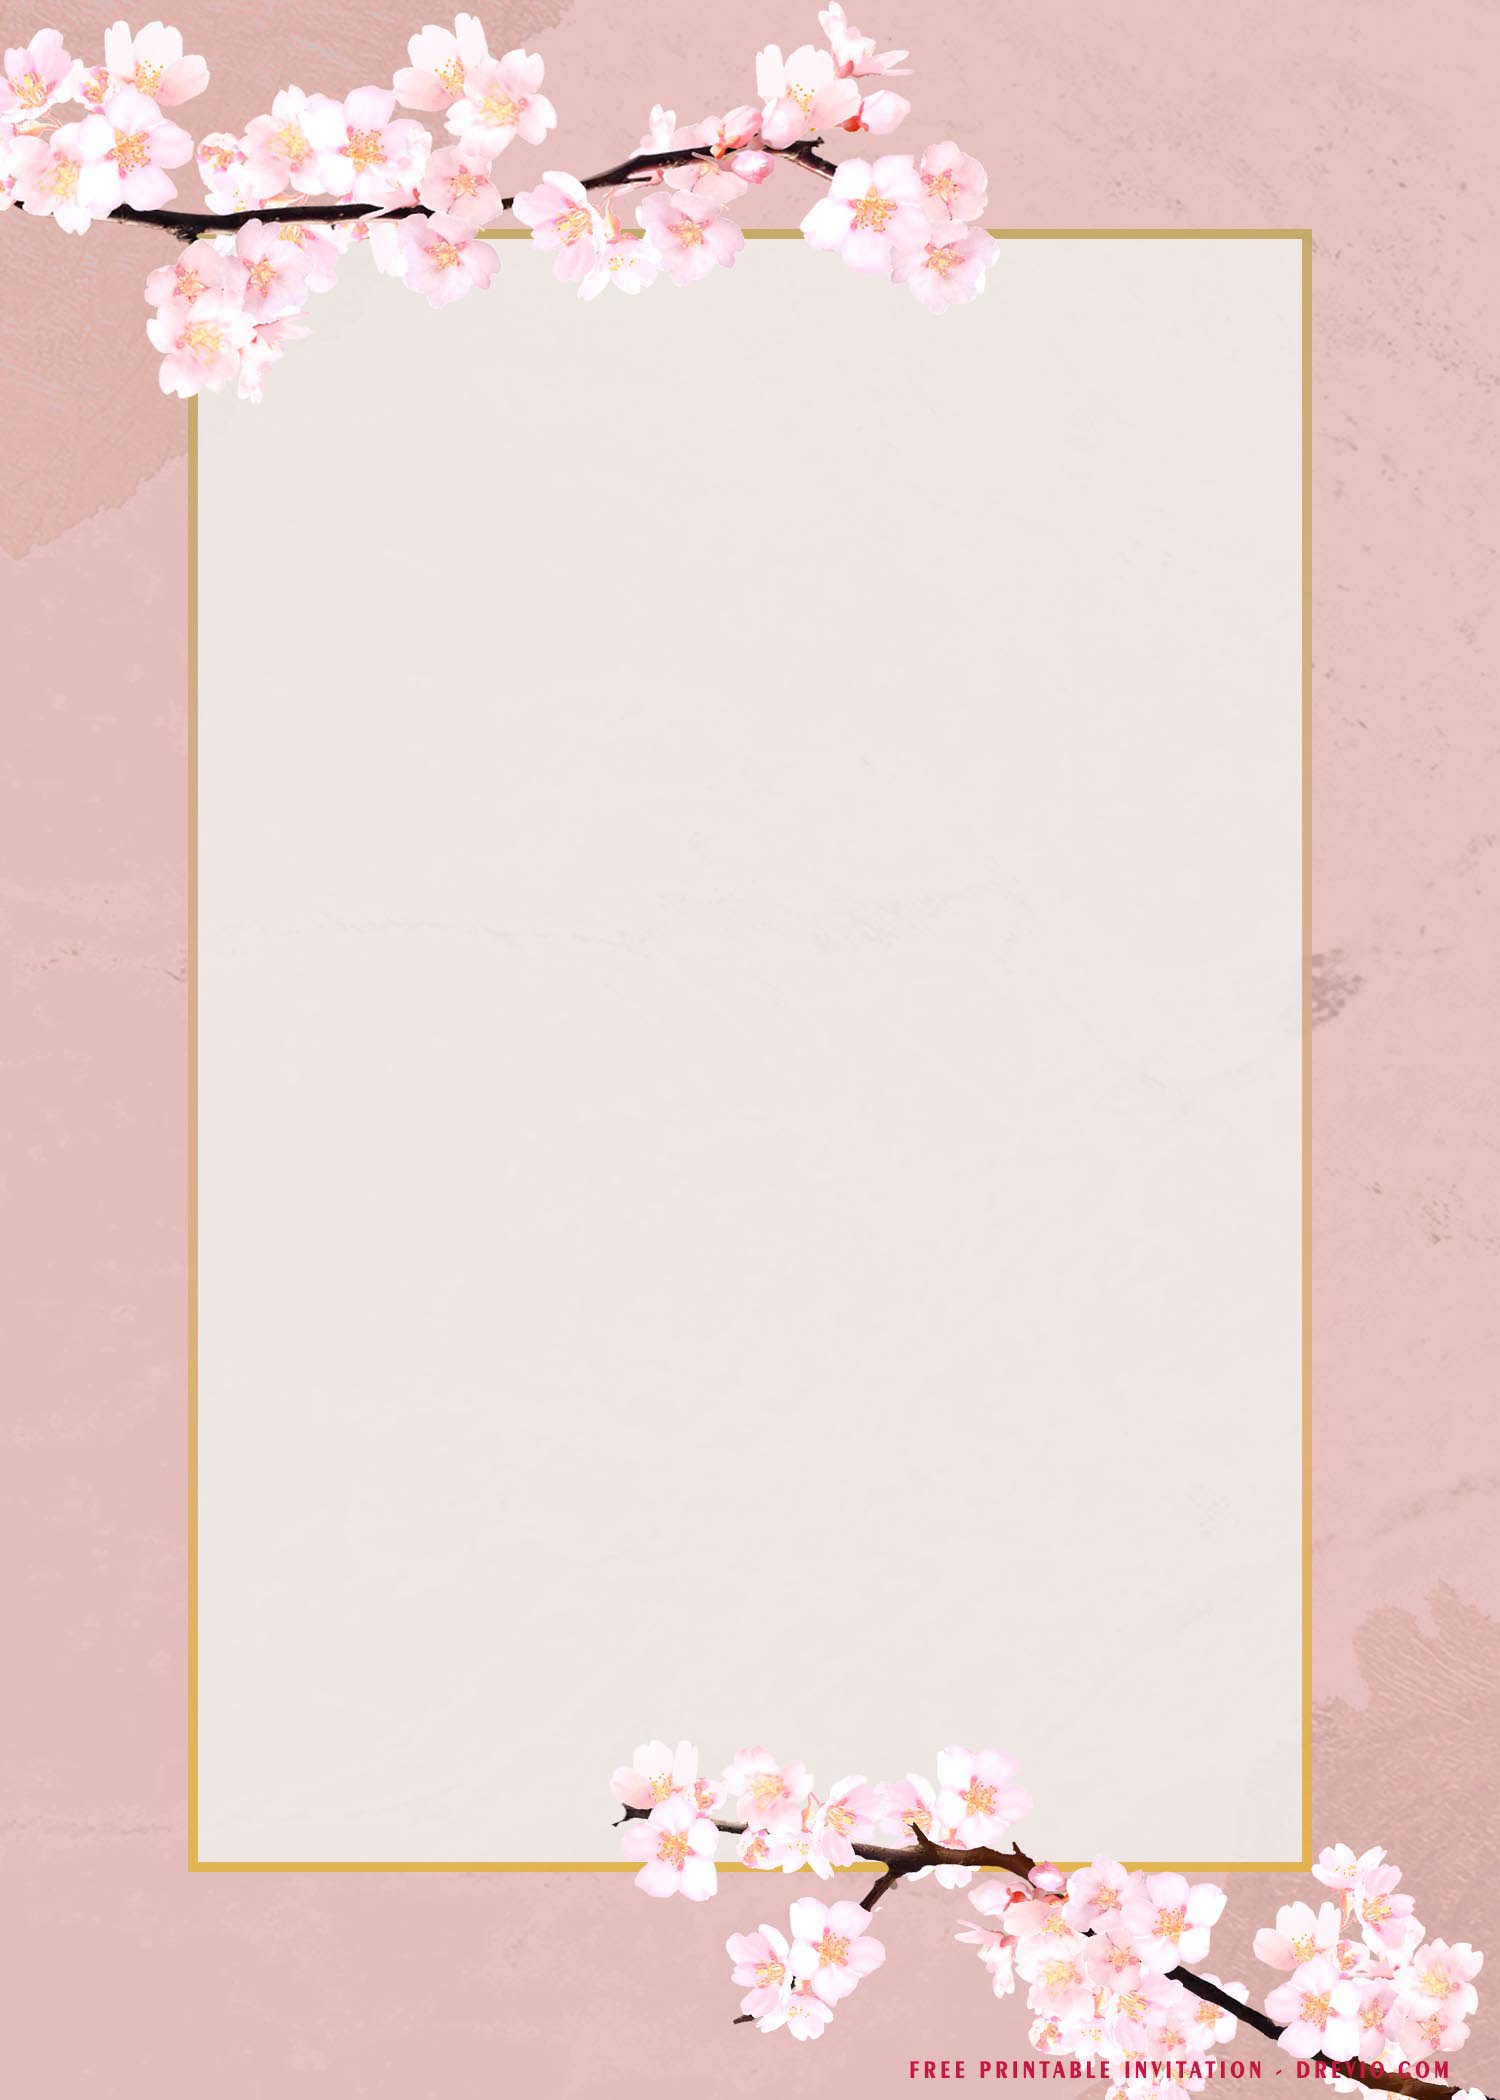 FREE Printable) – Blush Pink Baby Shower Invitation Templates | Download  Hundreds FREE PRINTABLE Birthday Invitation Templates